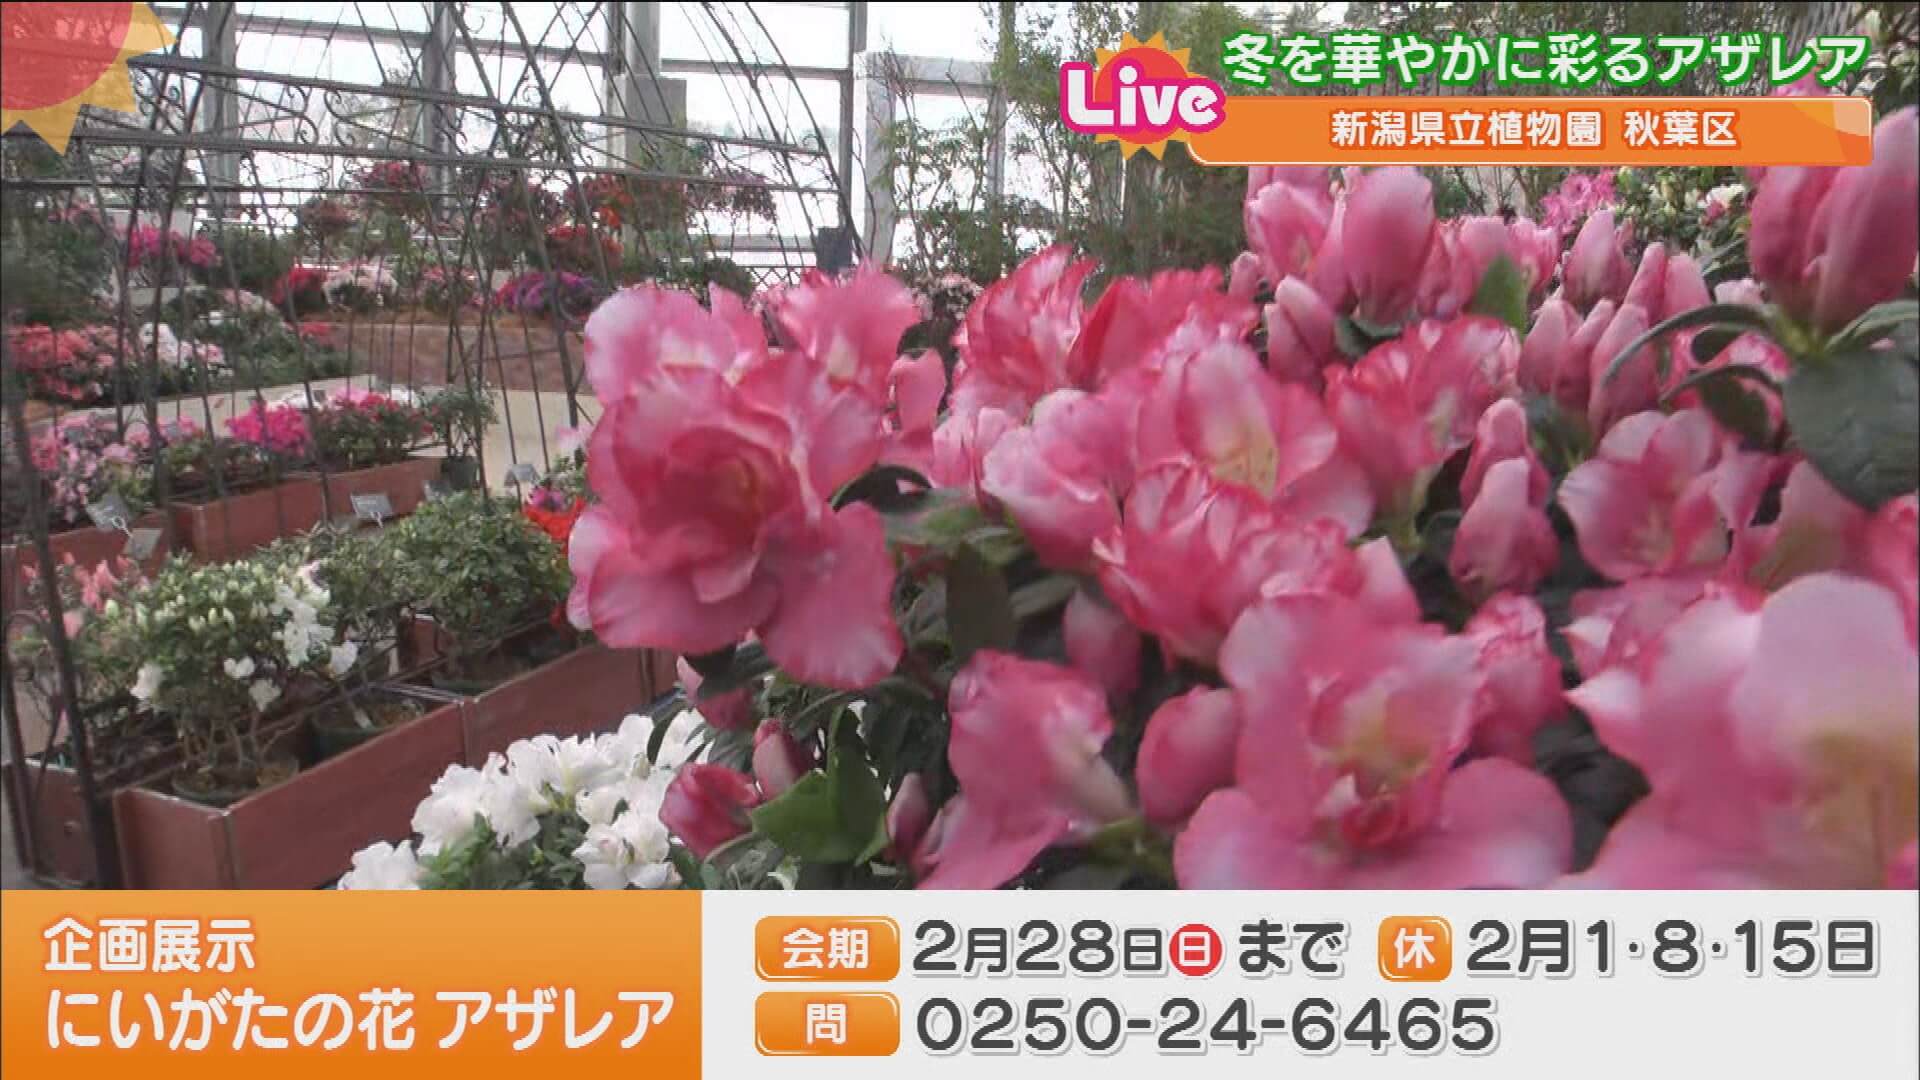 Ux新潟テレビ21 1 30 テレビお花見 冬を華やかに彩るアザレア